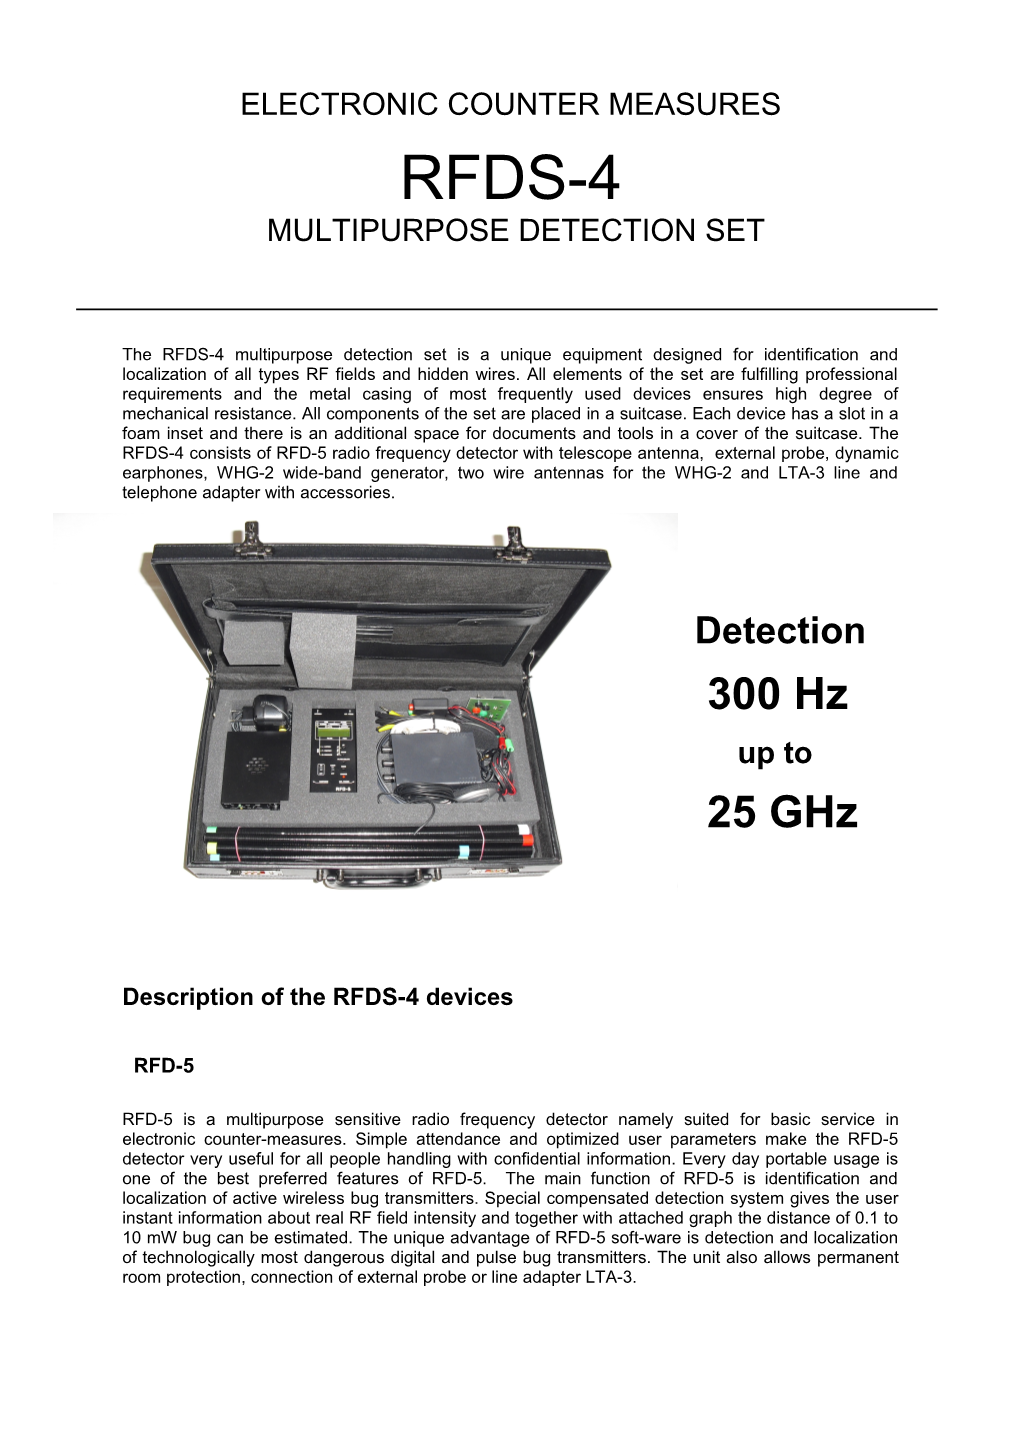 Multipurpose Detection Set RFDS-3